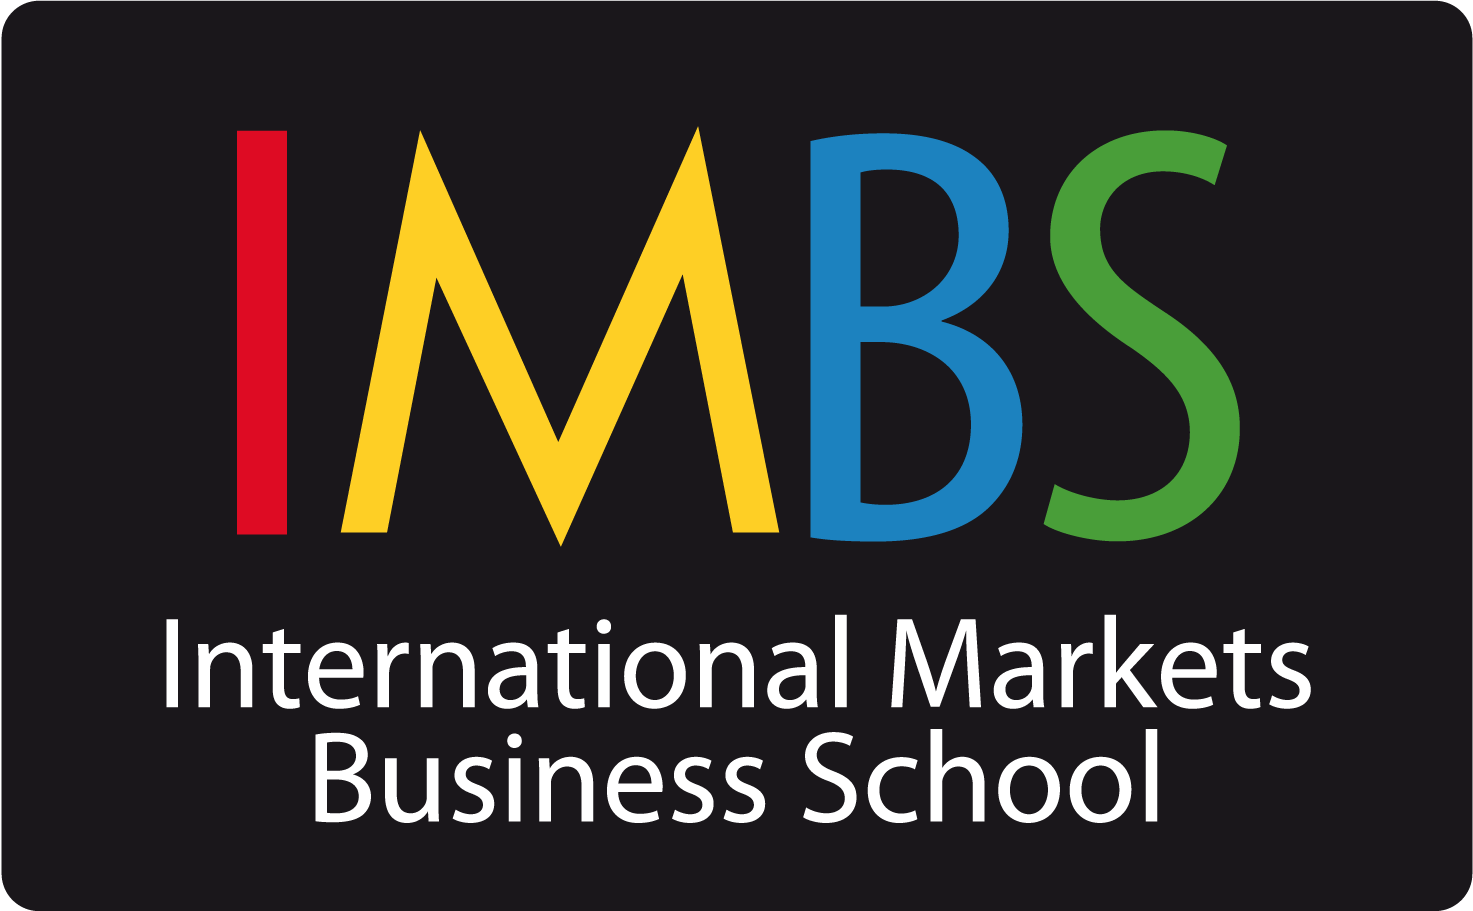 International Markets Business School